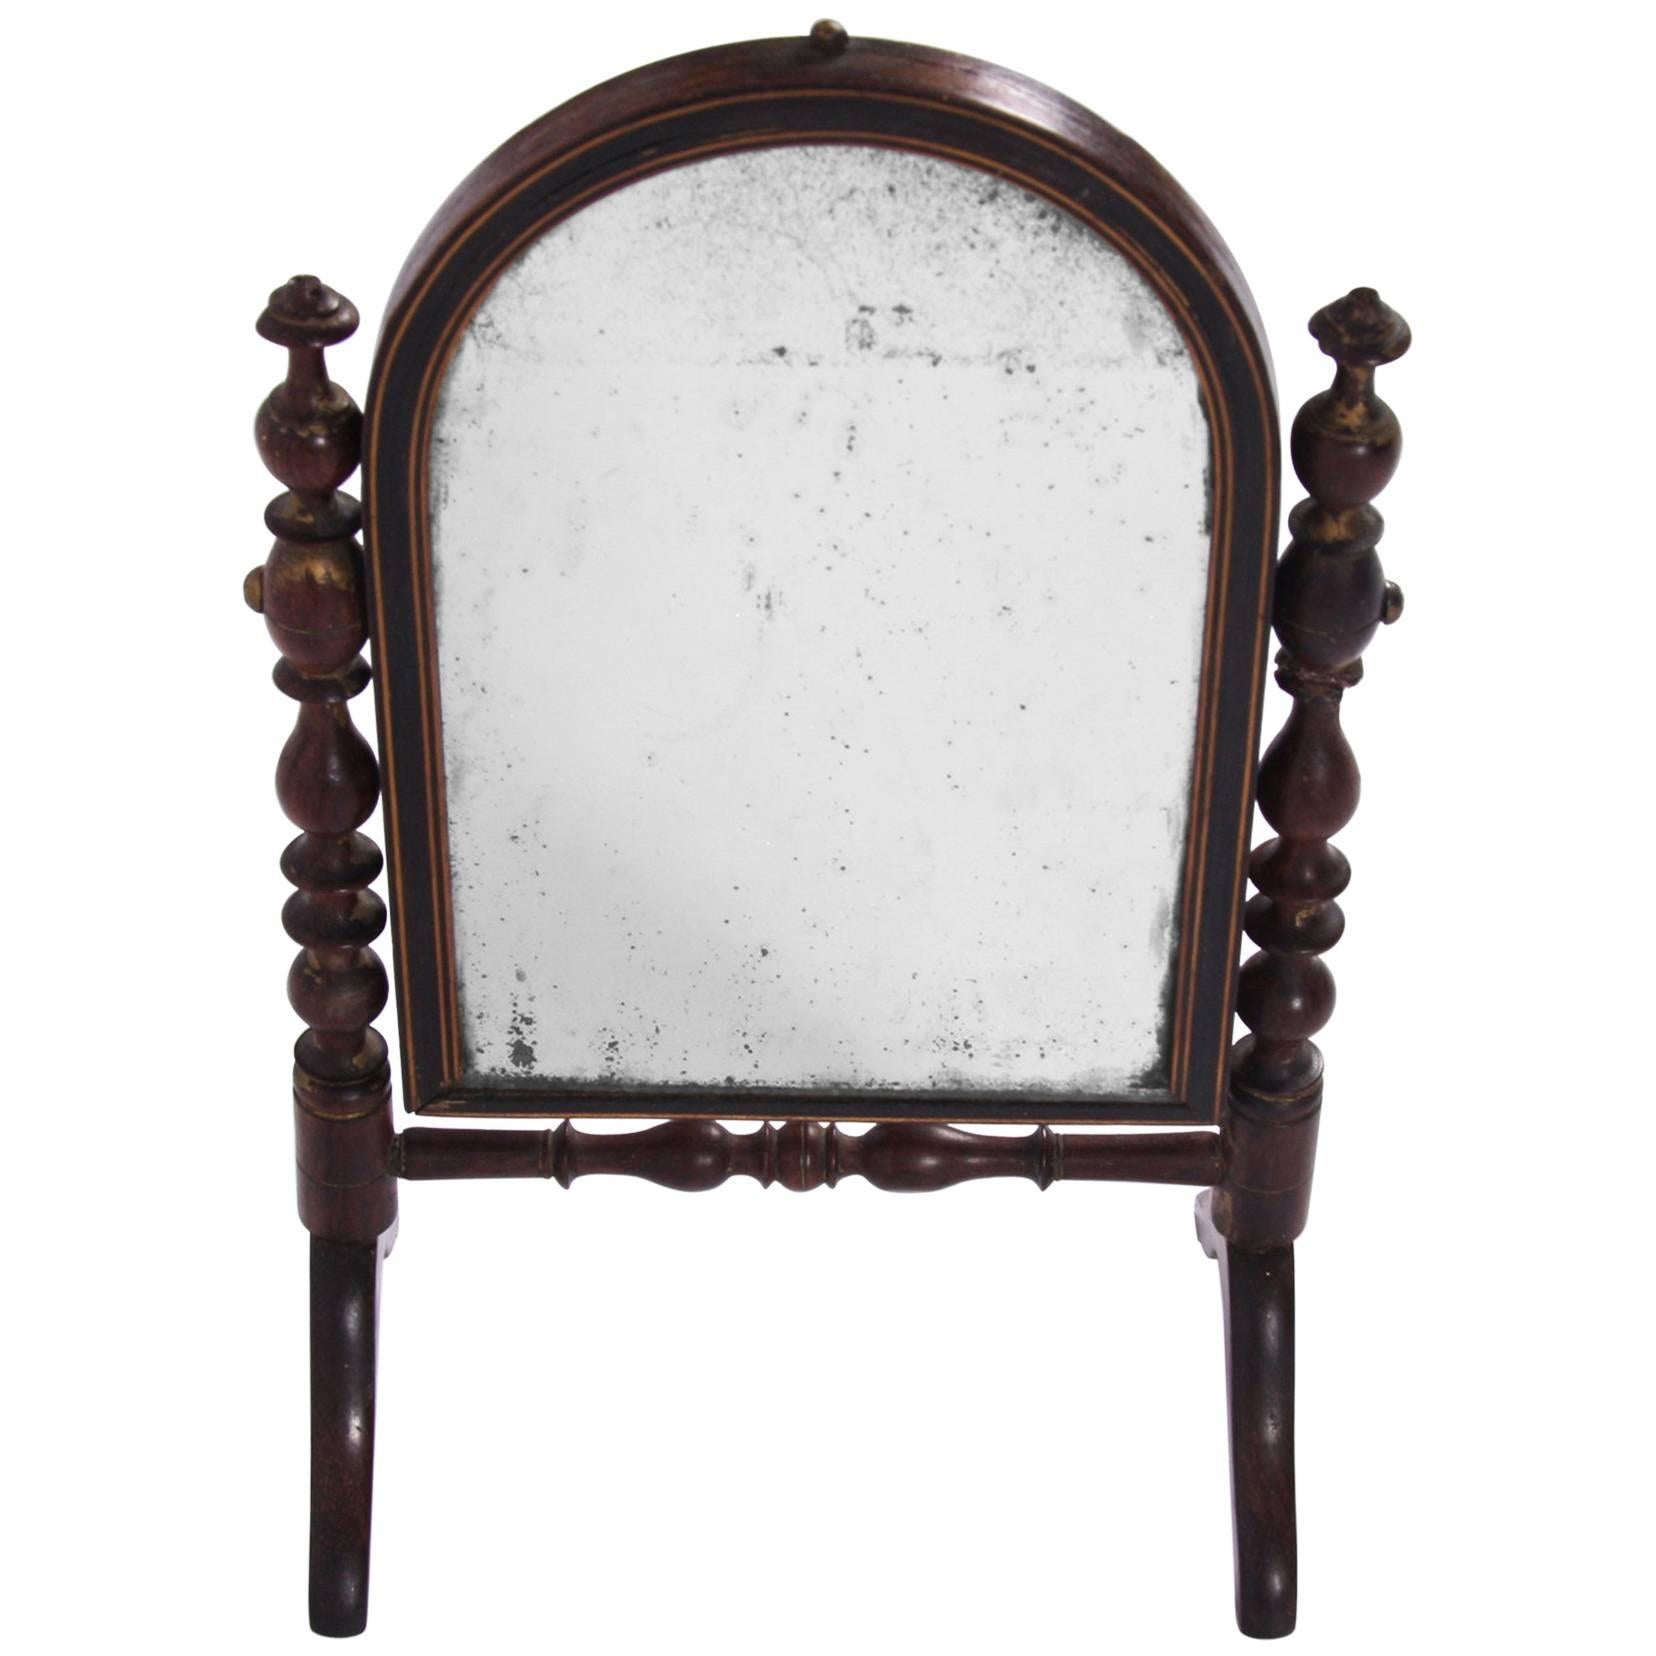 19th Century English Miniature Travel Mirror